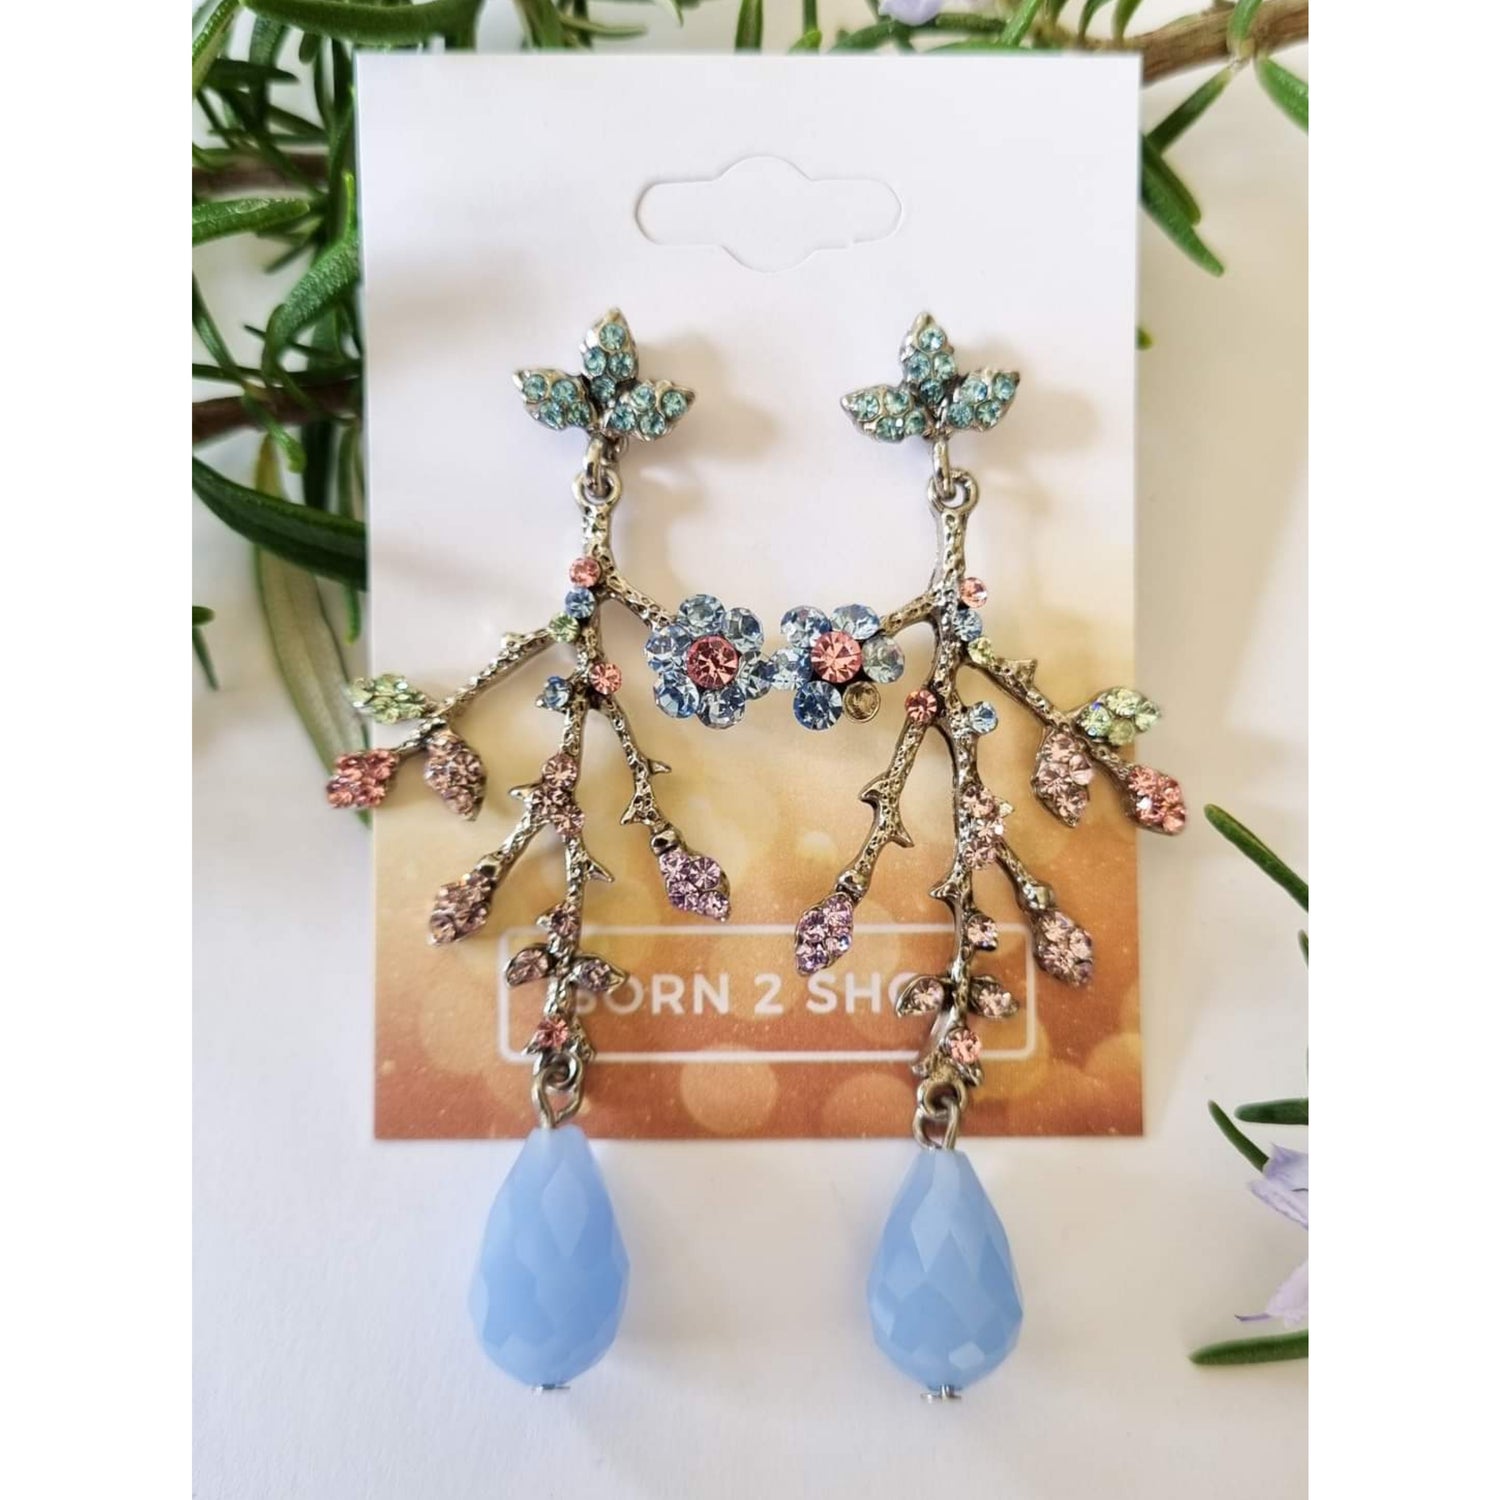 Milano Swarovski Floral Earrings - Lt Blue